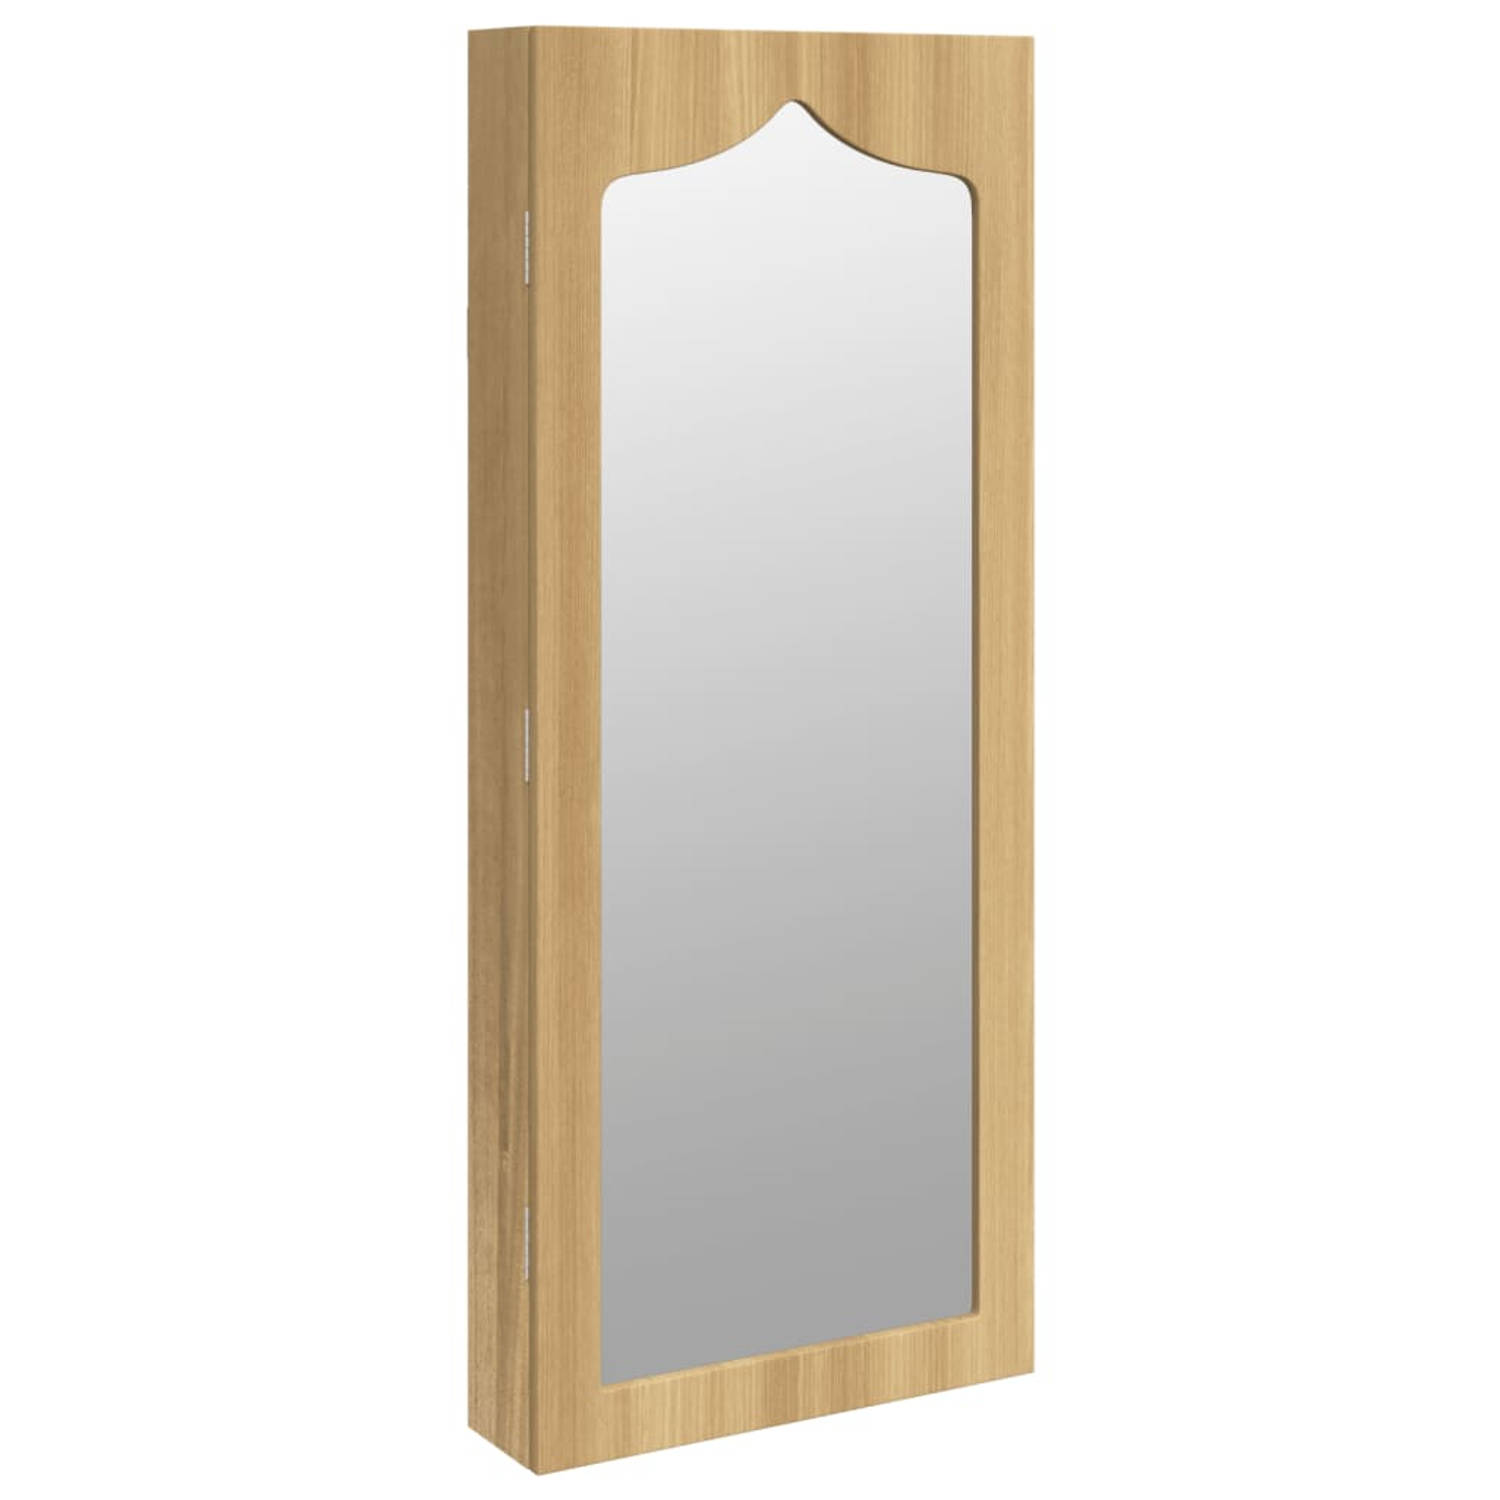 The Living Store Sieradenkast met spiegel wandgemonteerd 37-5x10x90 cm - Spiegel